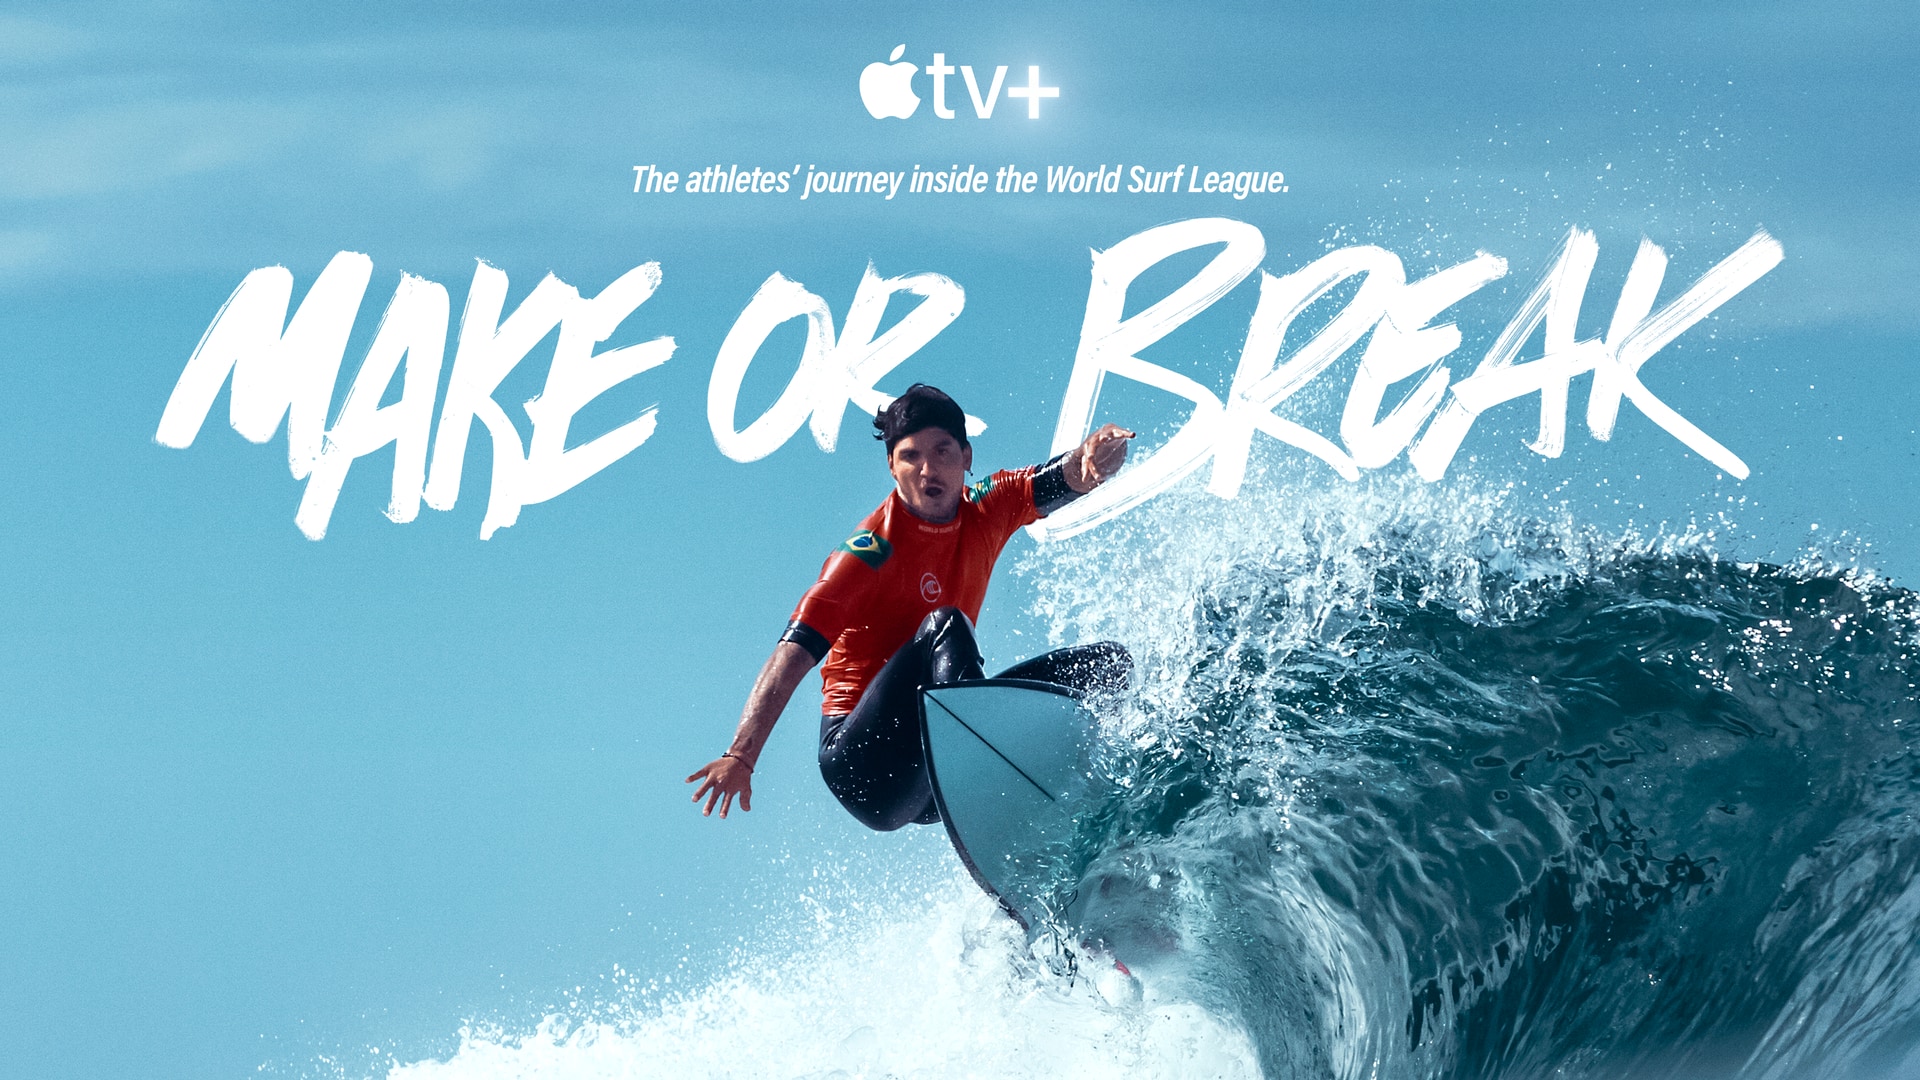 Make it or break the Apple TV+ show